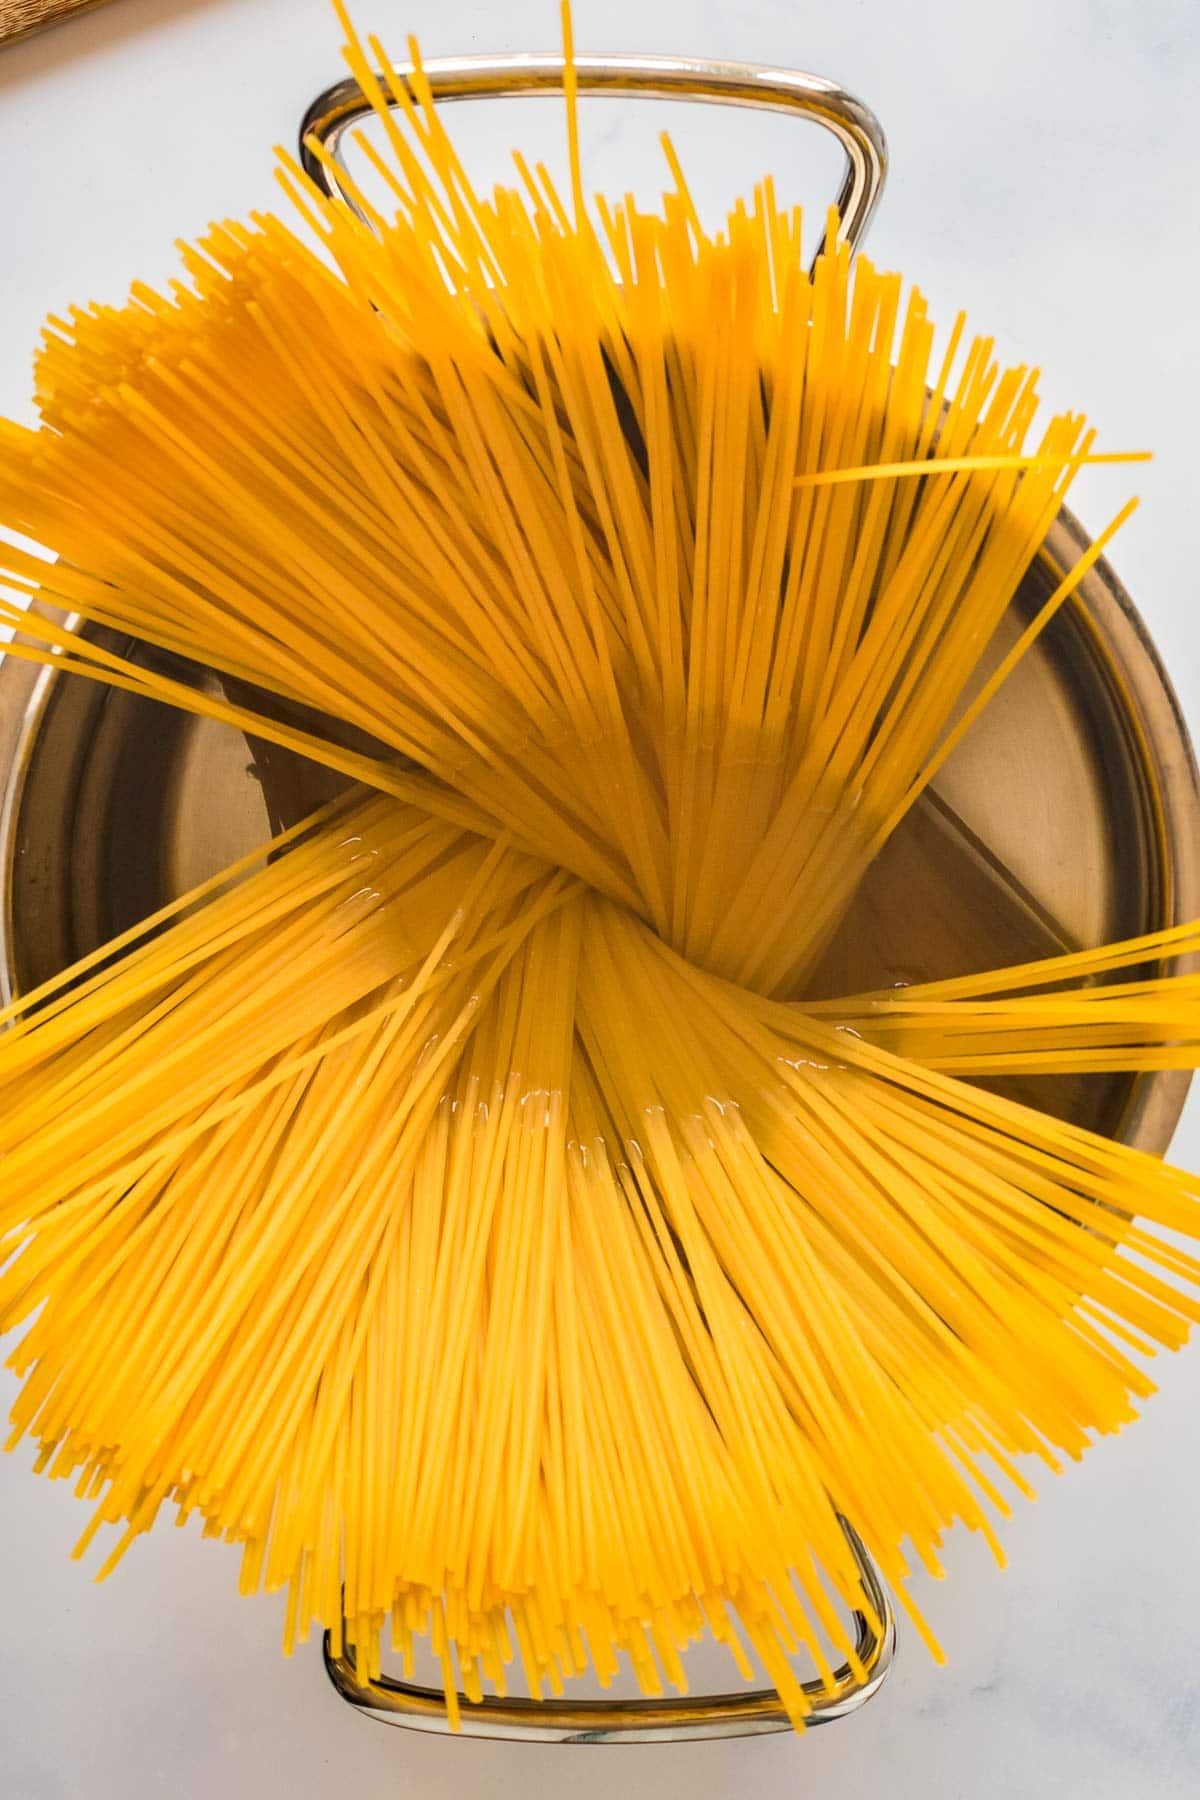 spaghetti in pot